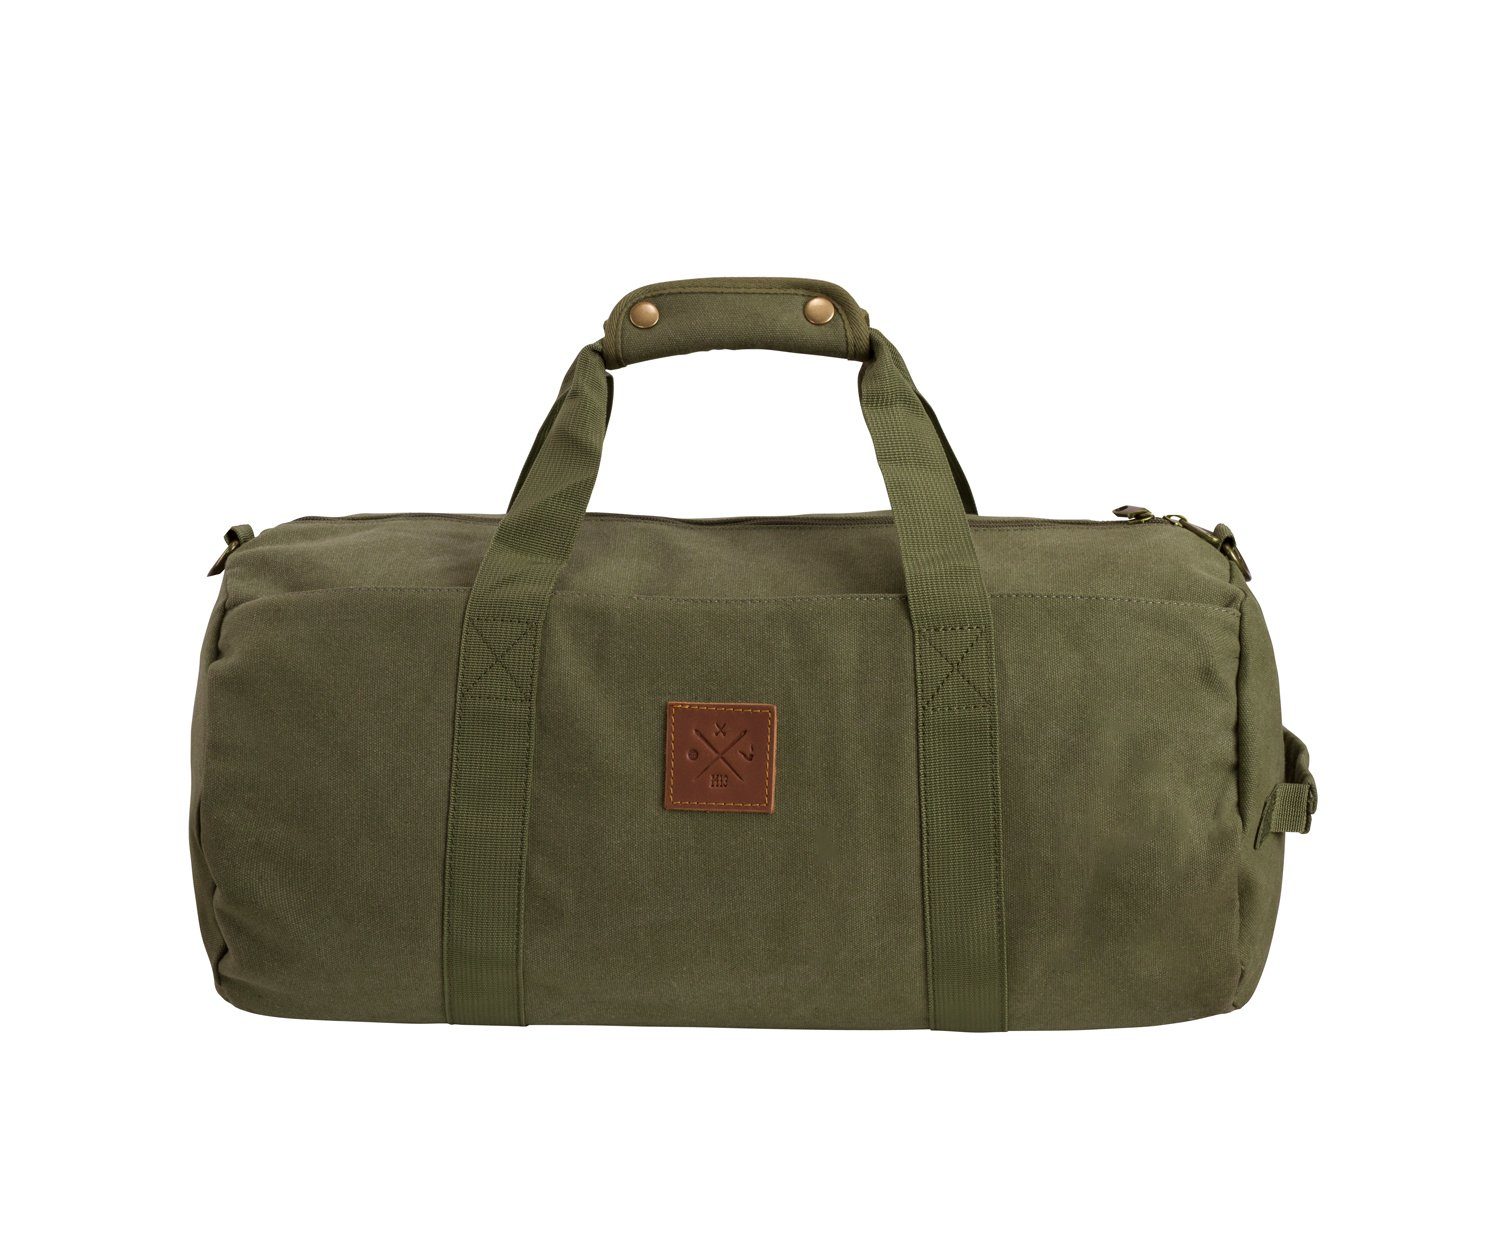 Manufaktur13 Sporttasche Canvas Barrel Bag 24L Sporttasche, Olive/Khaki Duffel Bag, Fassungsvermögen 